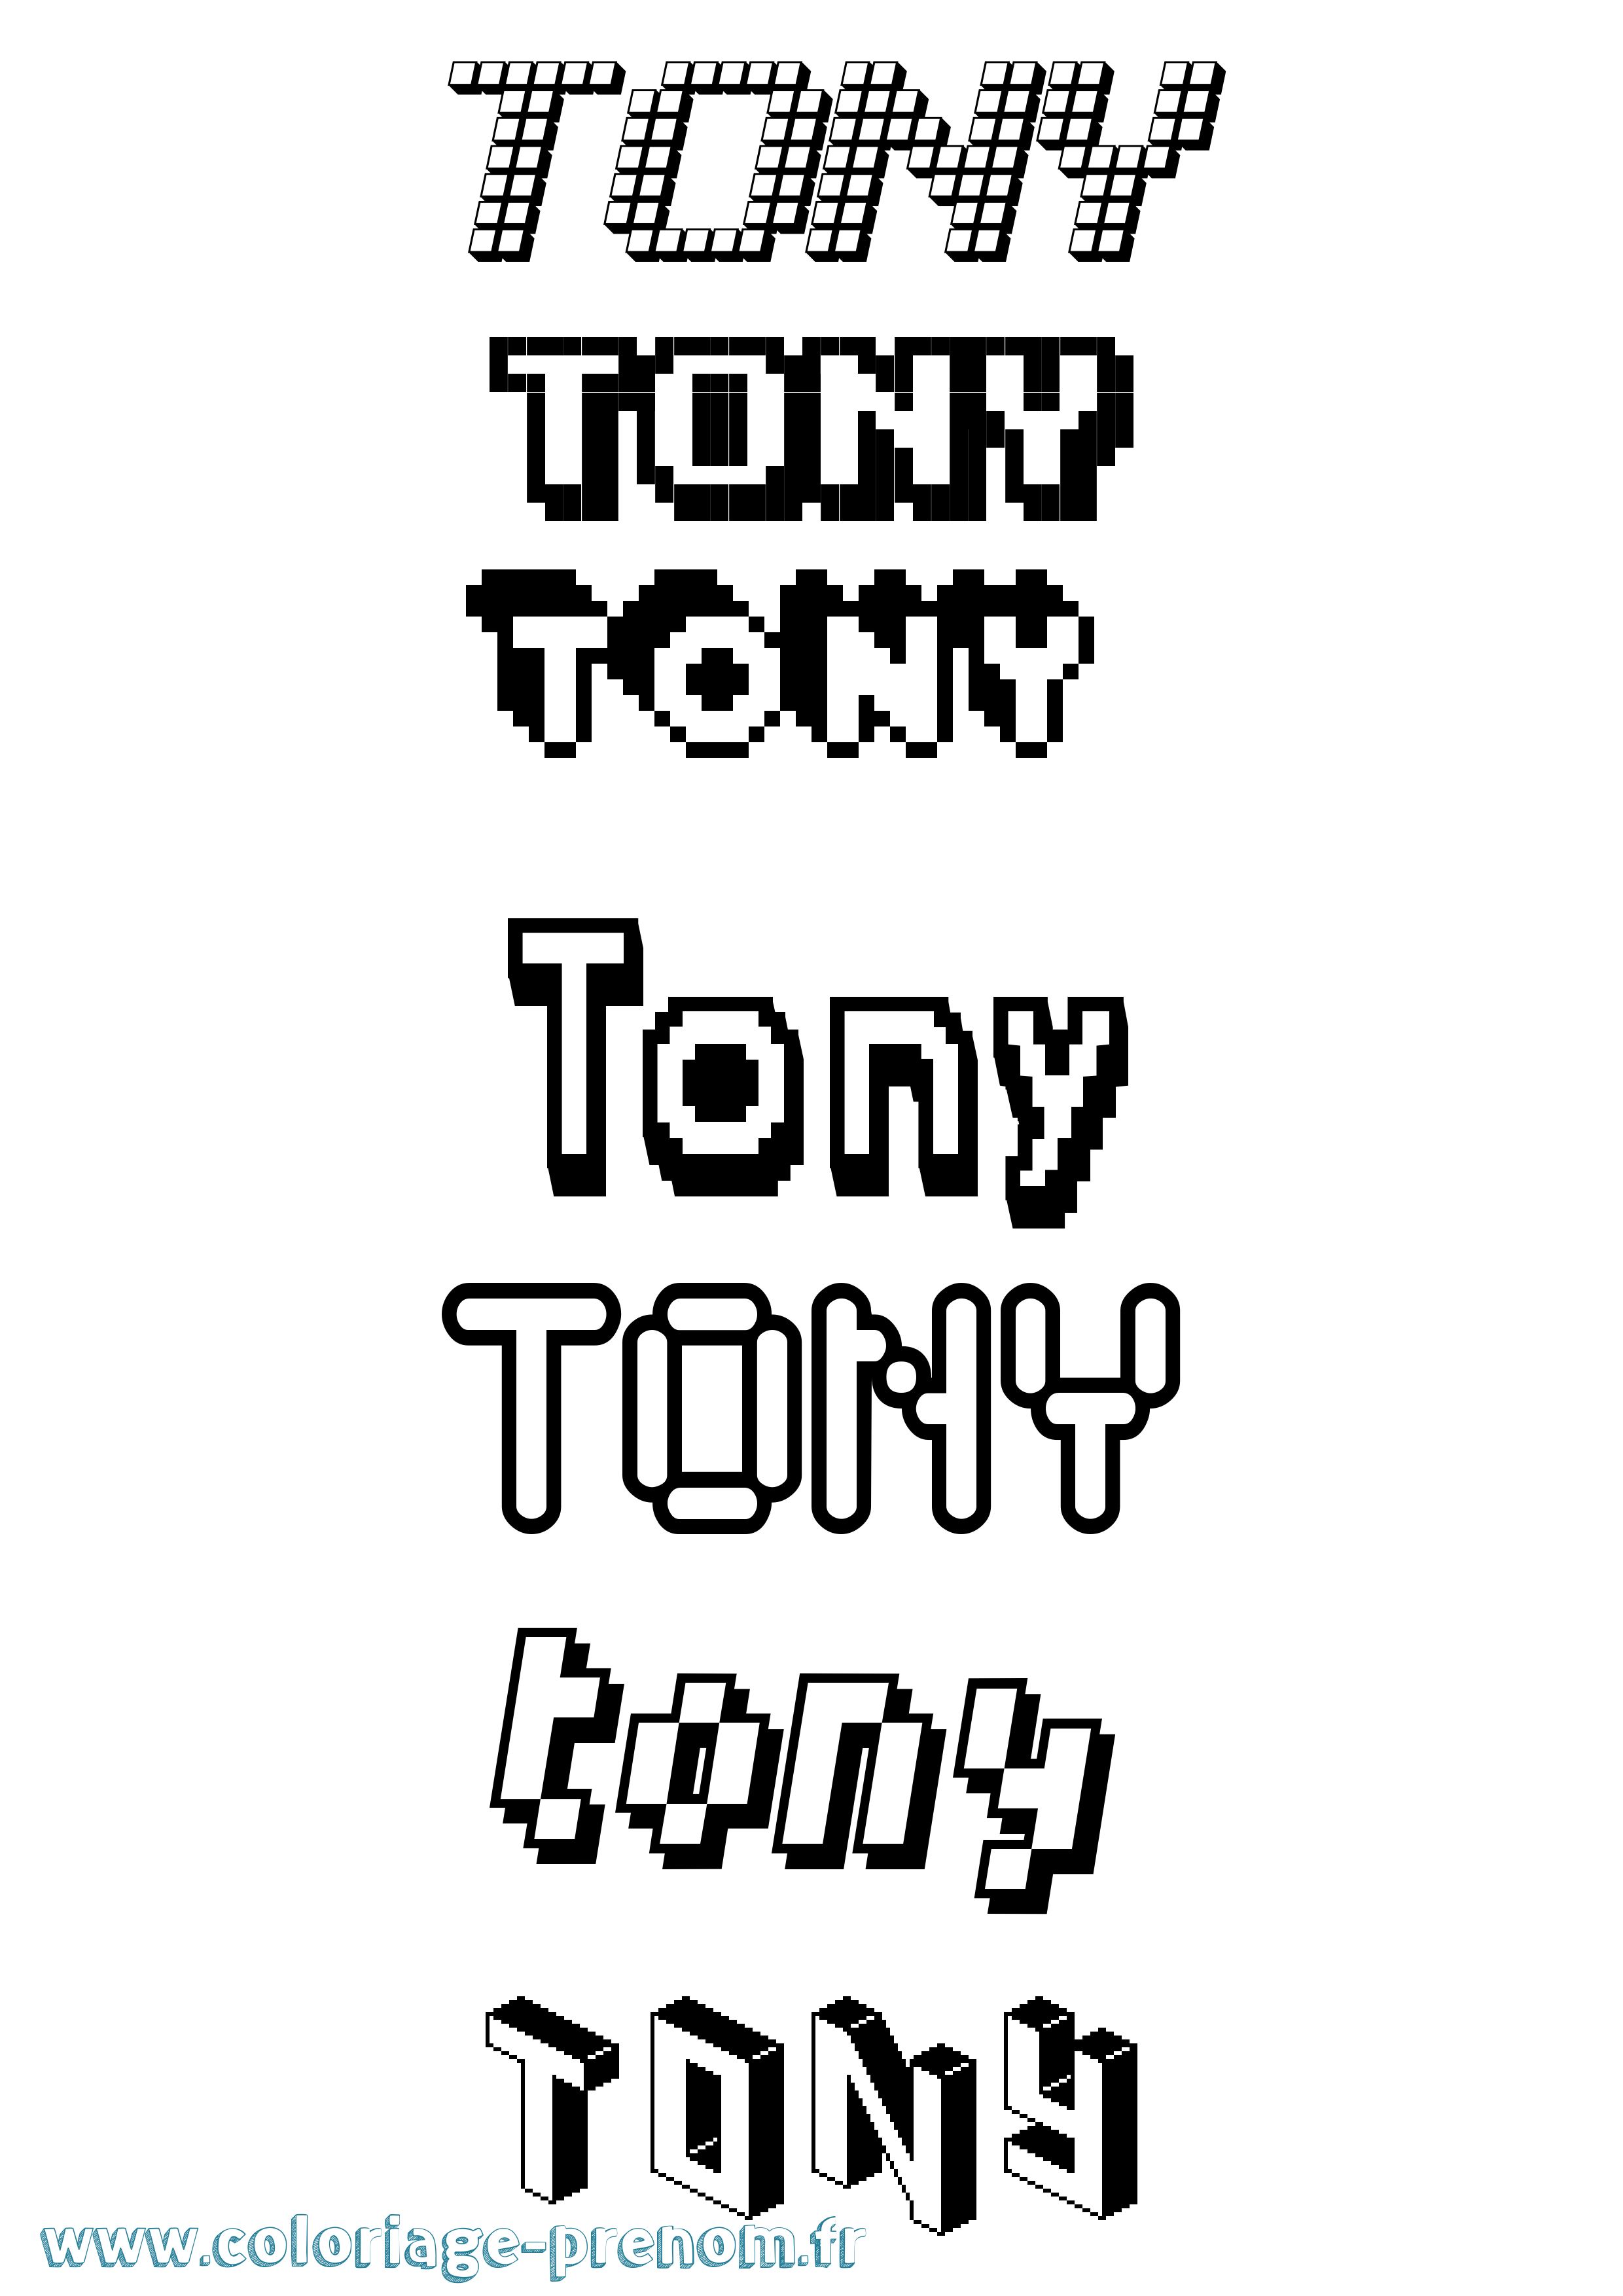 Coloriage prénom Tony Pixel